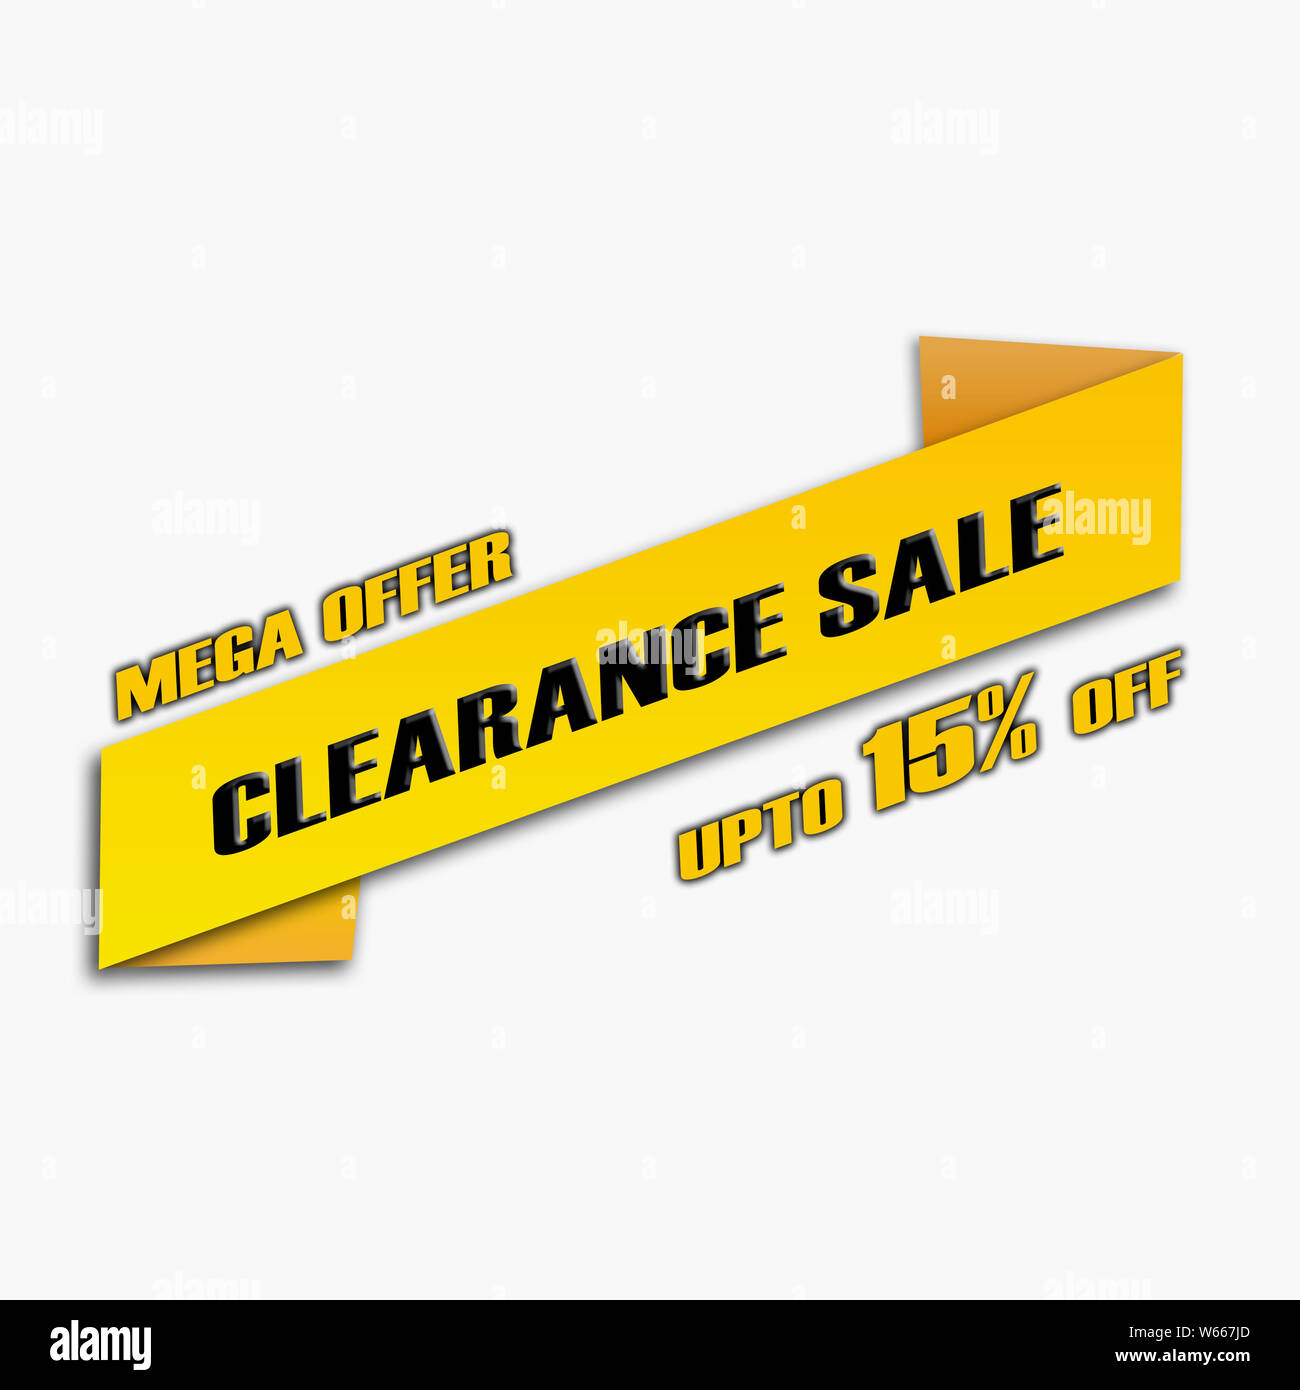 https://c8.alamy.com/comp/W667JD/mega-offer-clearance-sale-upto-15-off-W667JD.jpg